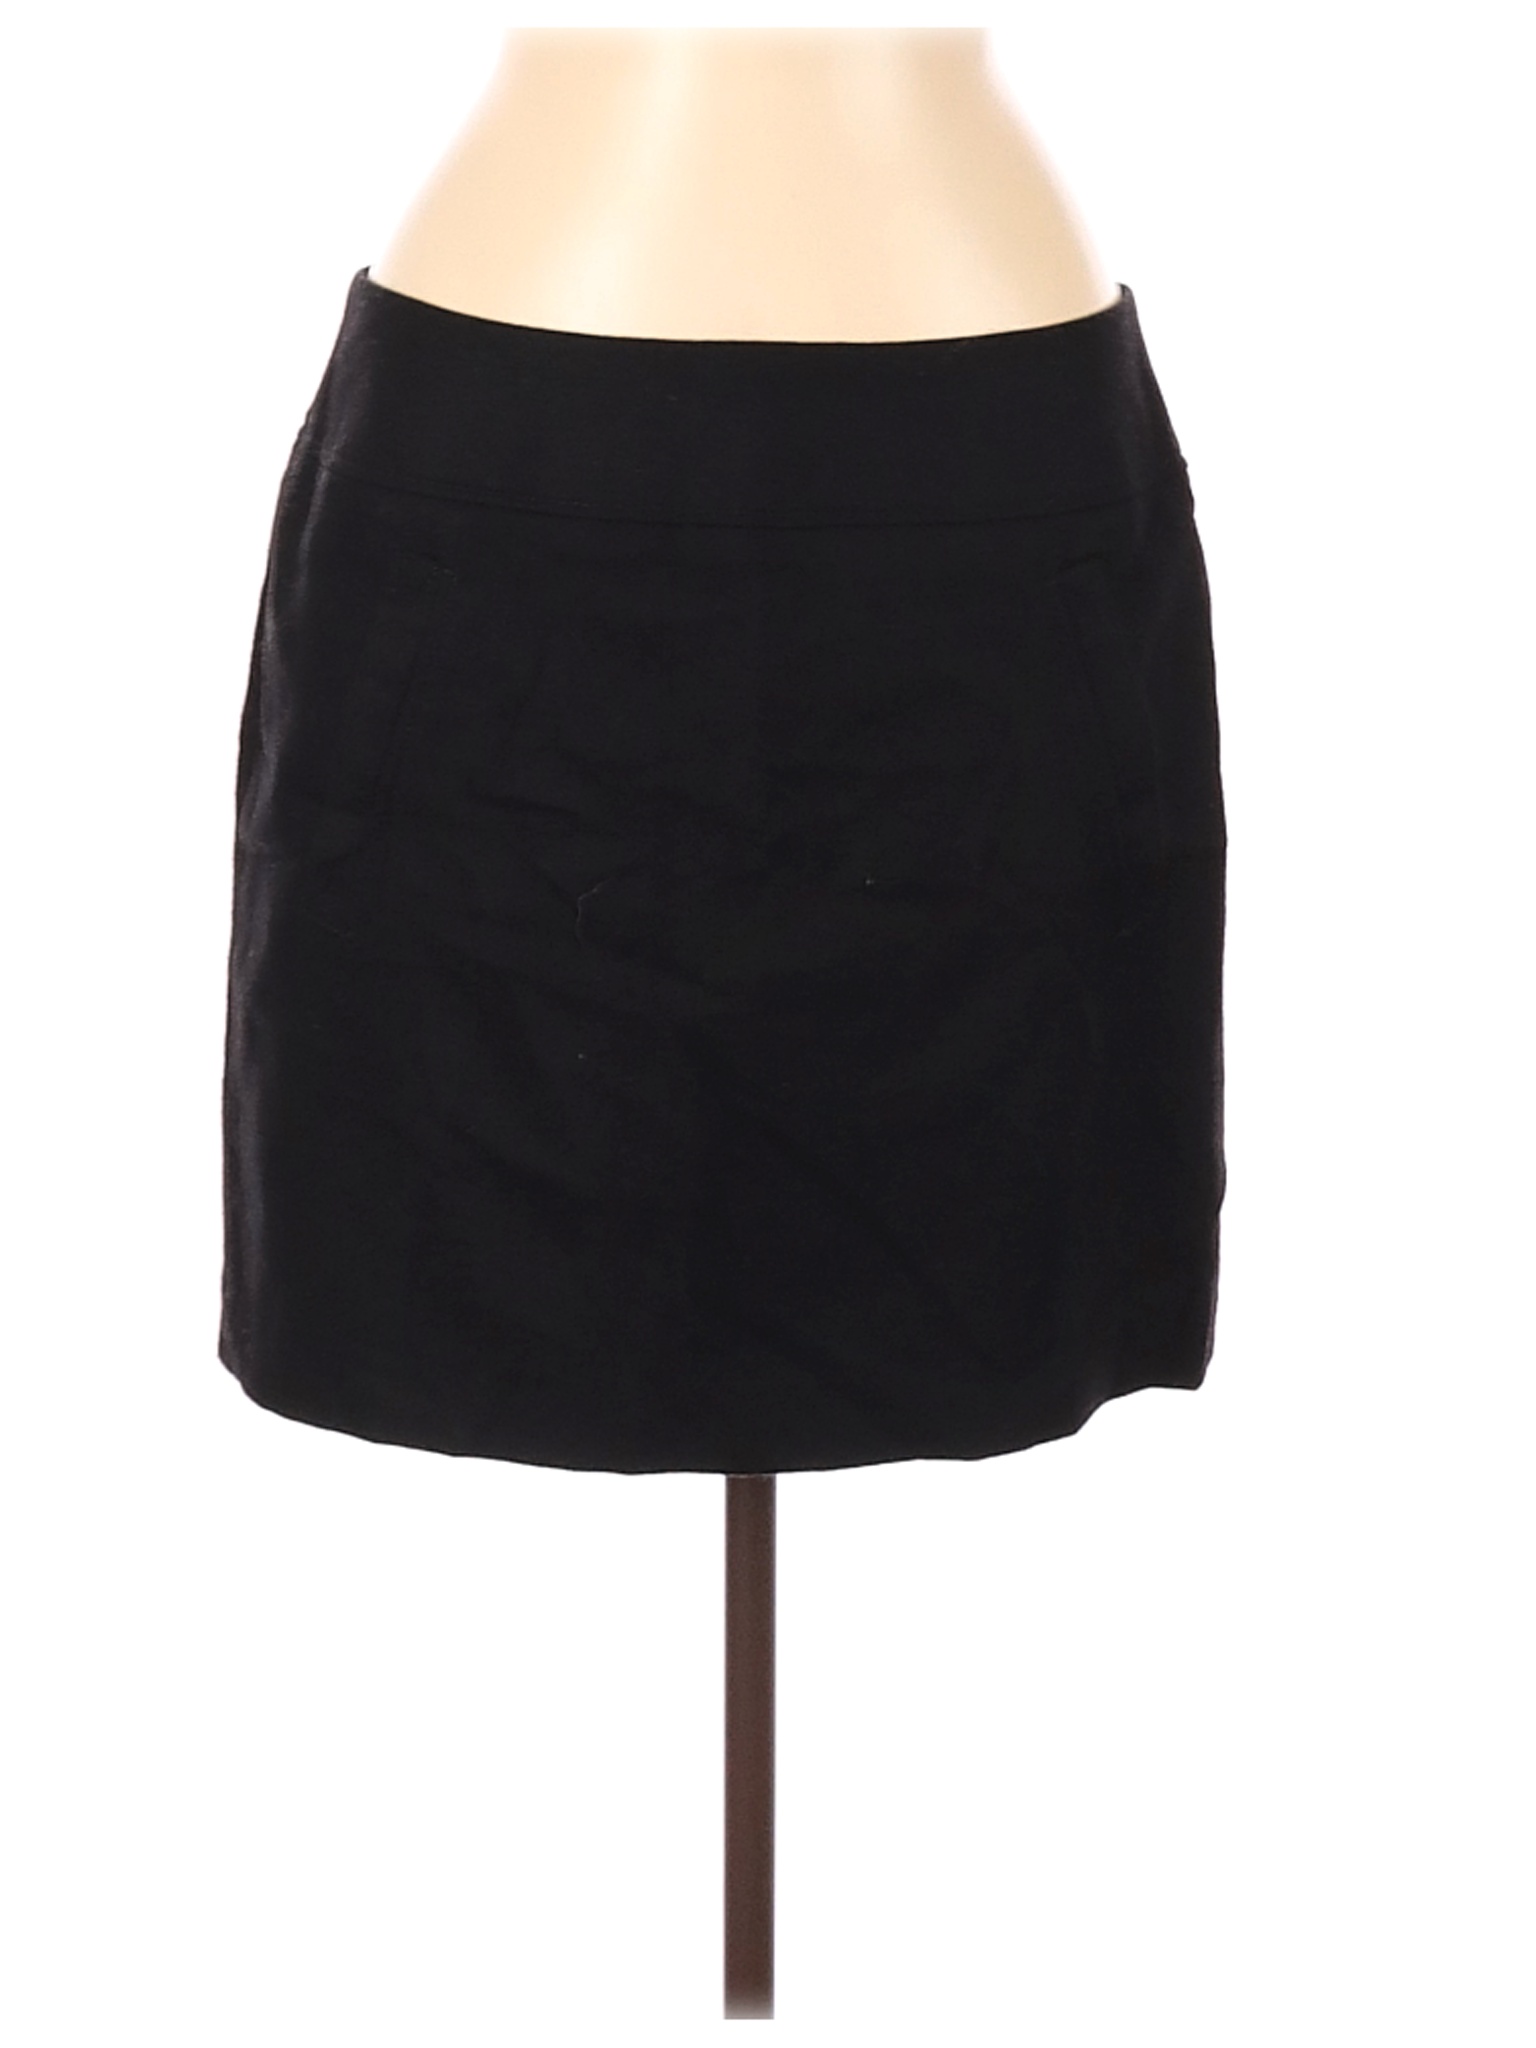 NWT H&M Women Black Wool Skirt 12 | eBay